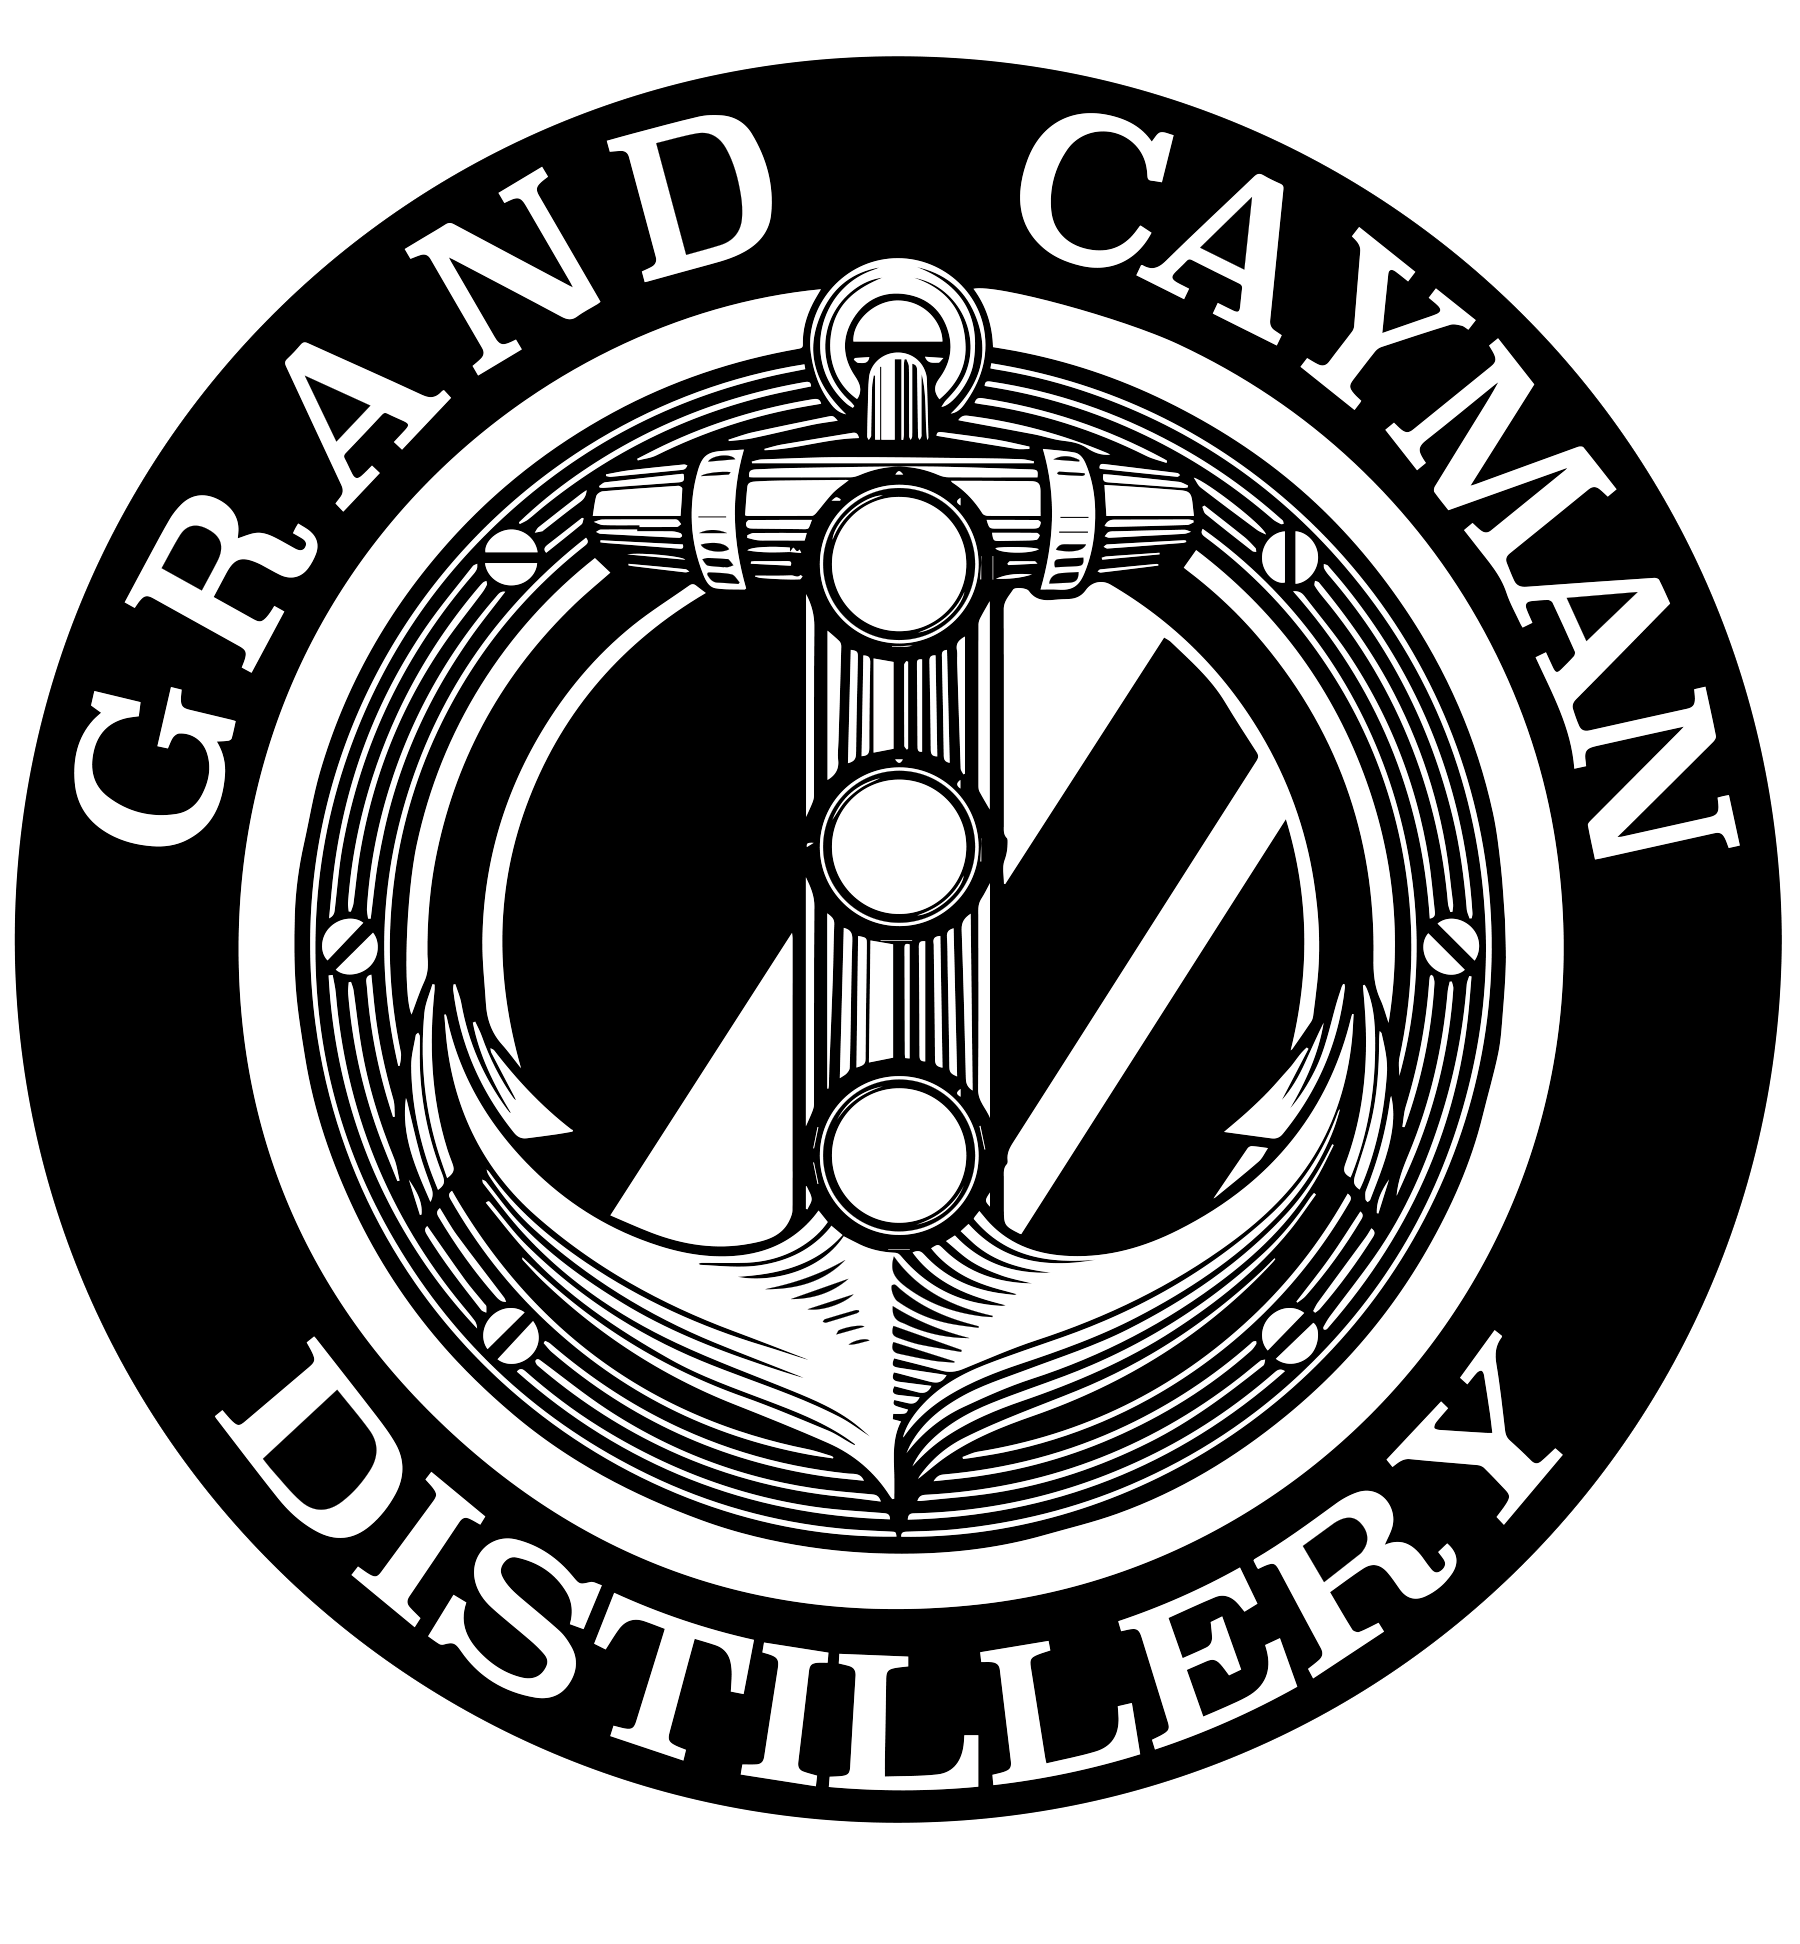 Grand Cayman Distillery Logo in Black